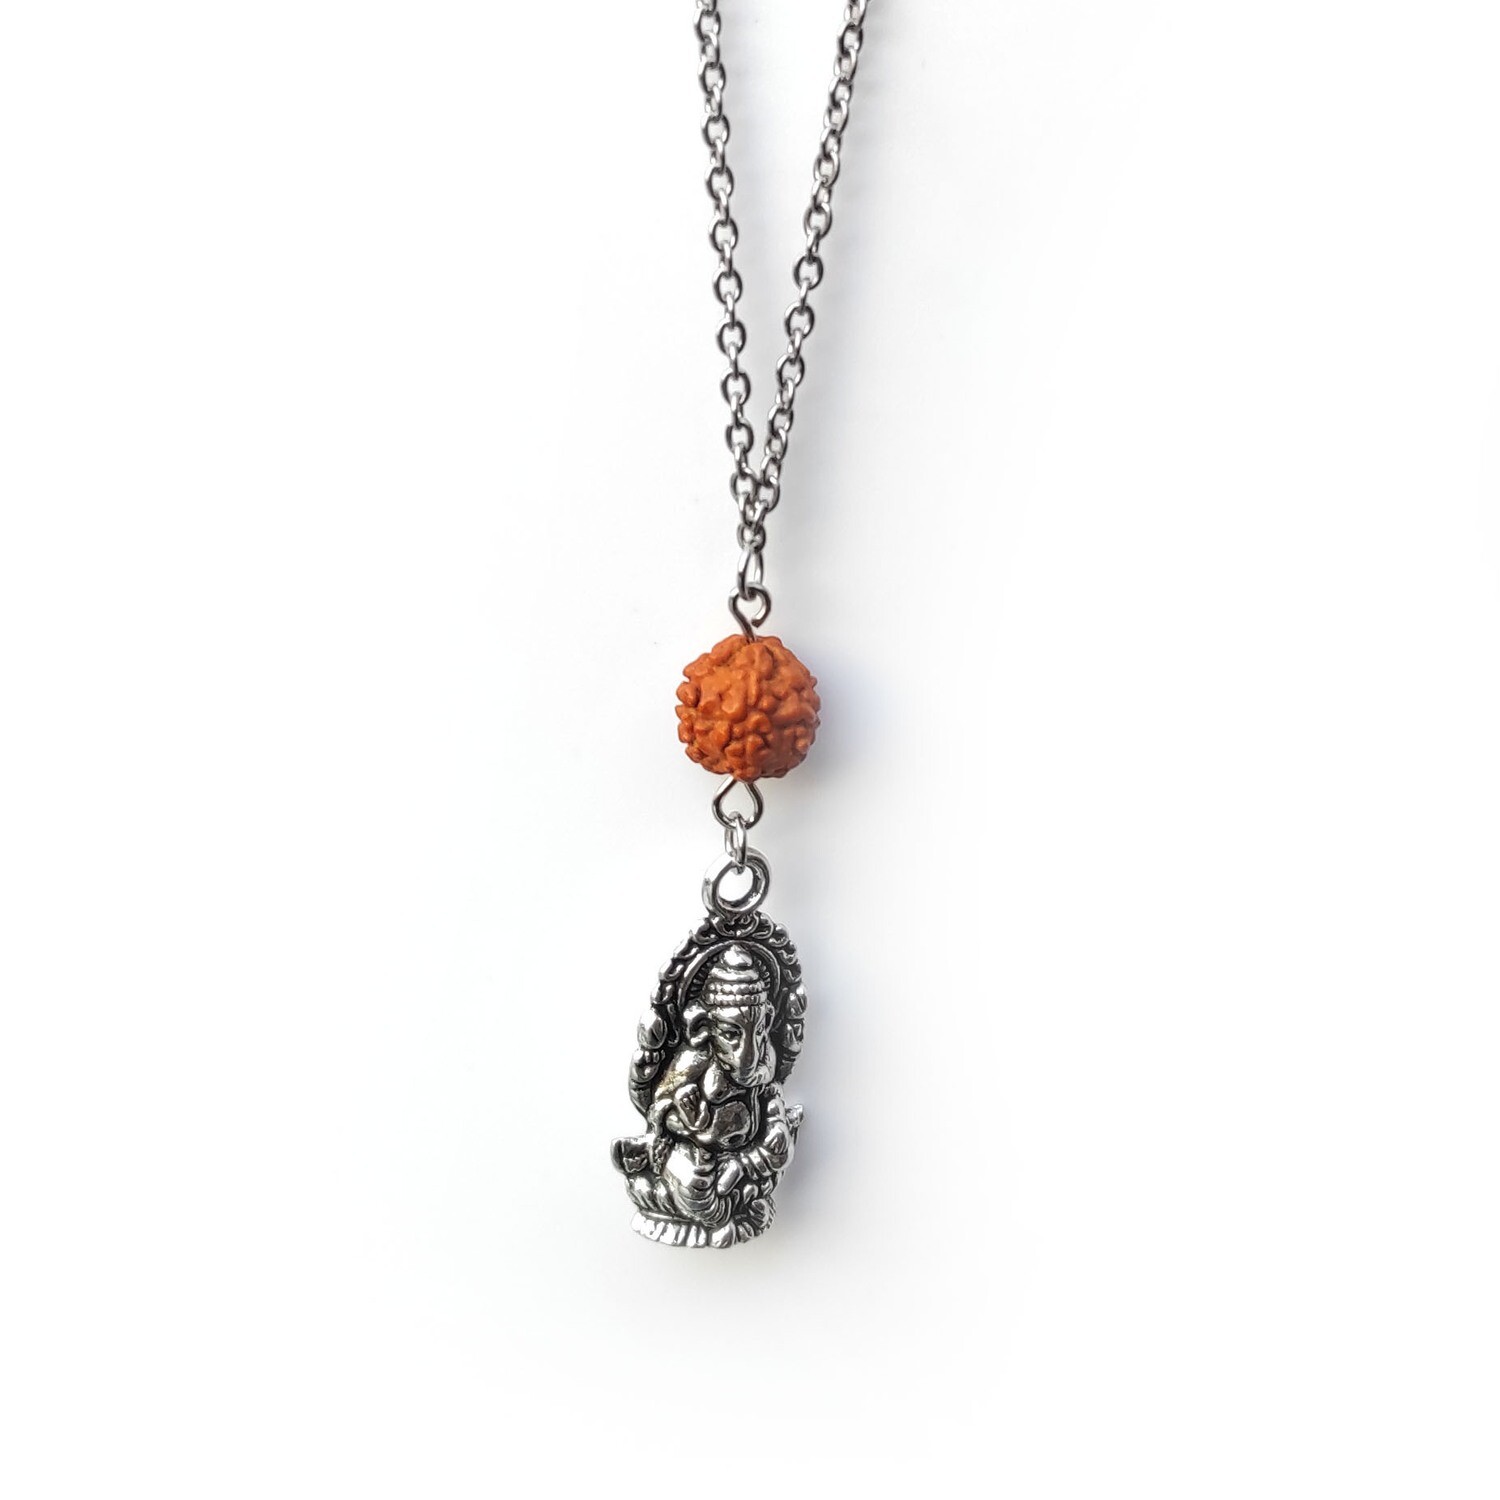 Ganesha and Rudraksha necklace